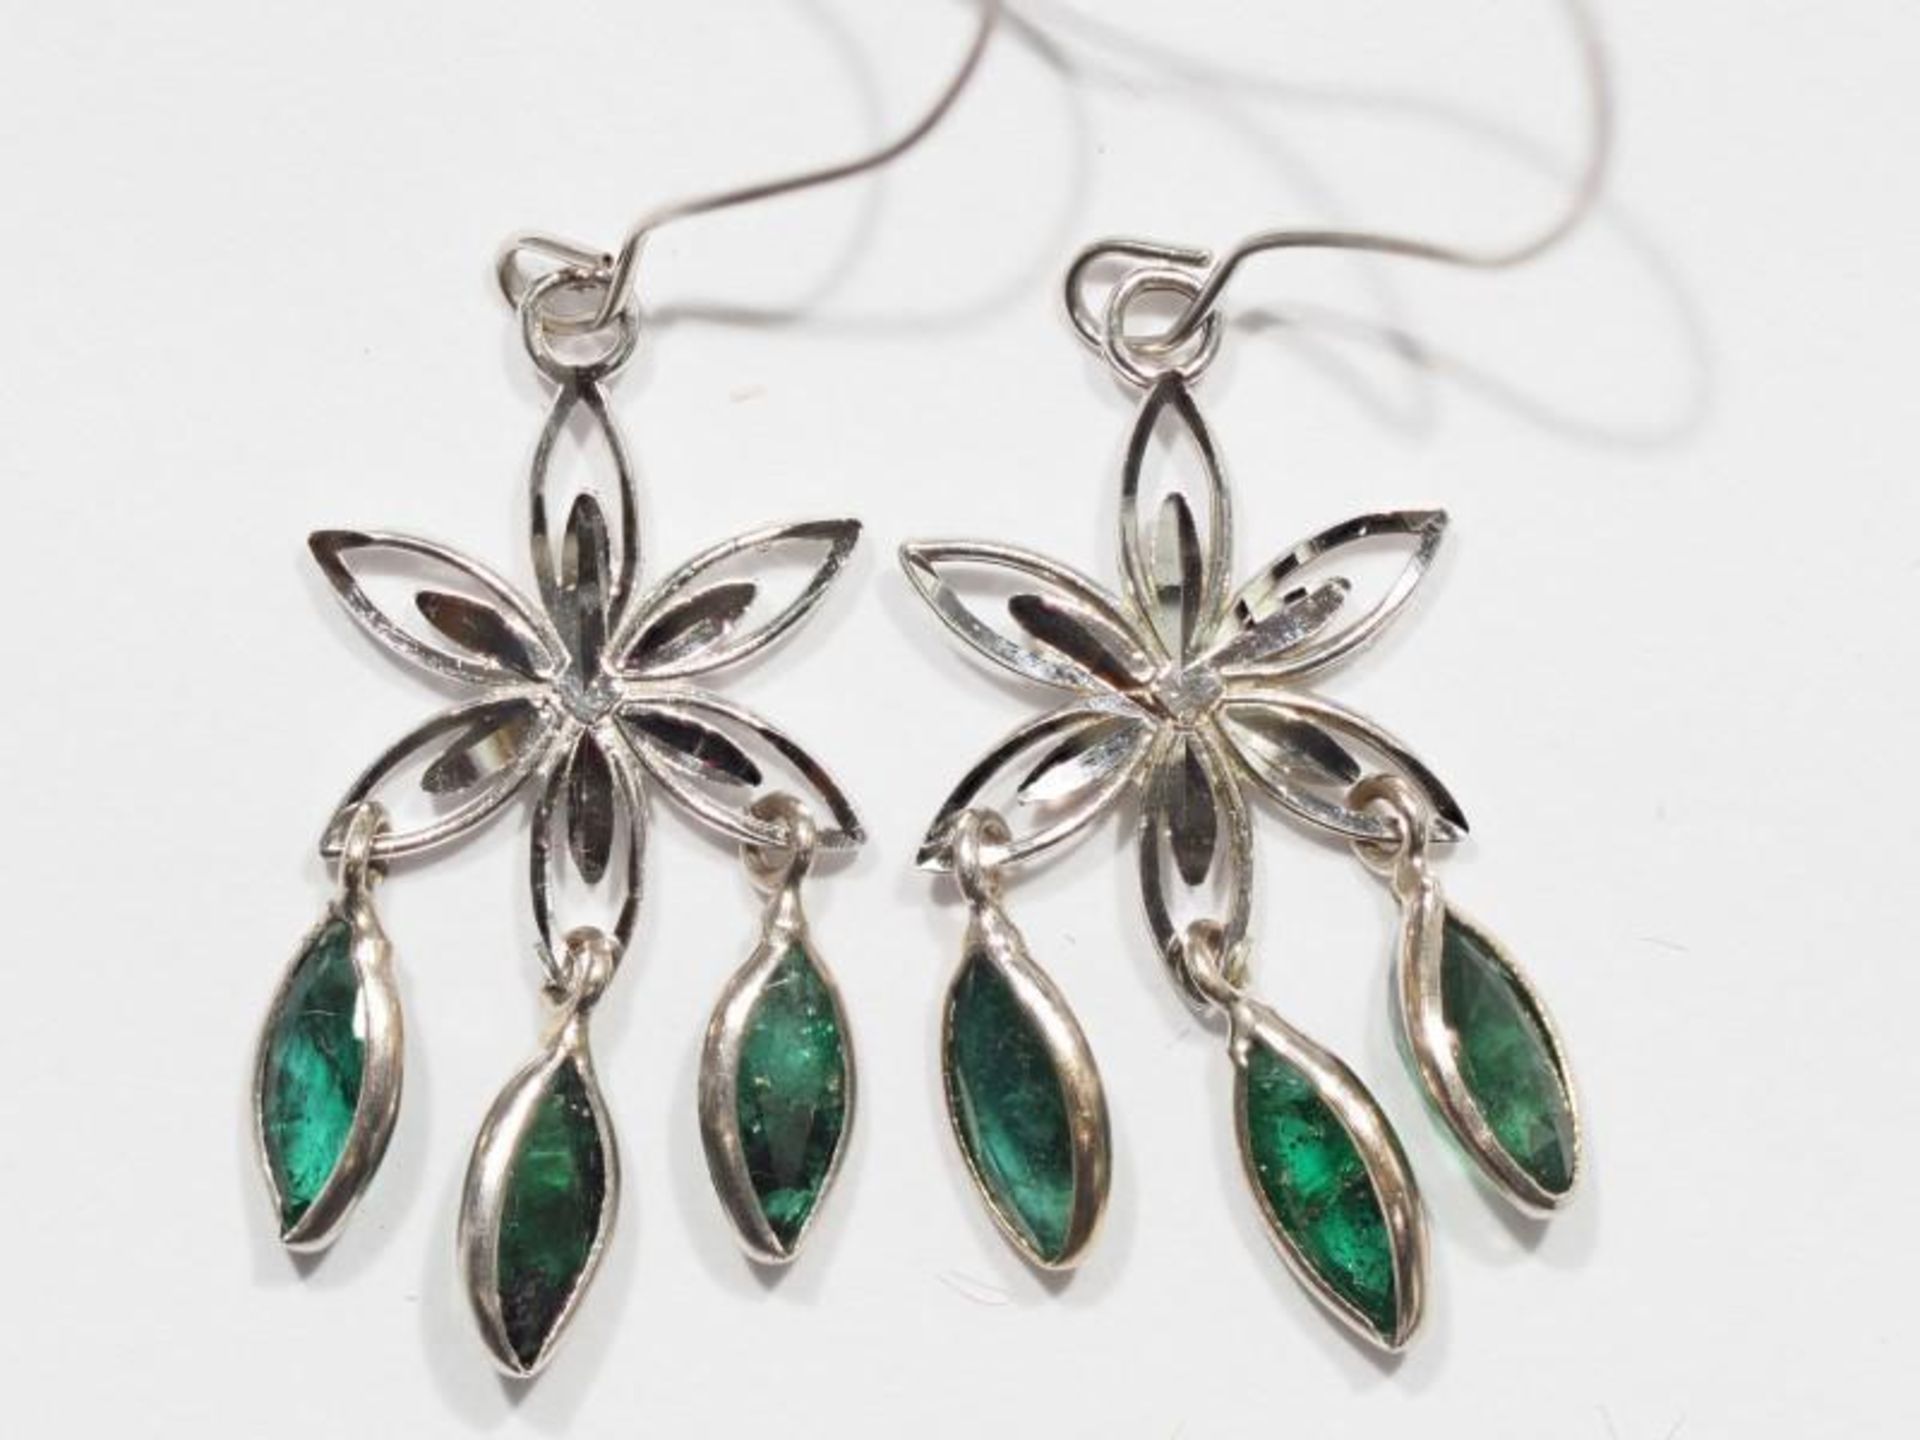 14K White Gold Emerald (1.08ct) Earrings. Retail $1200